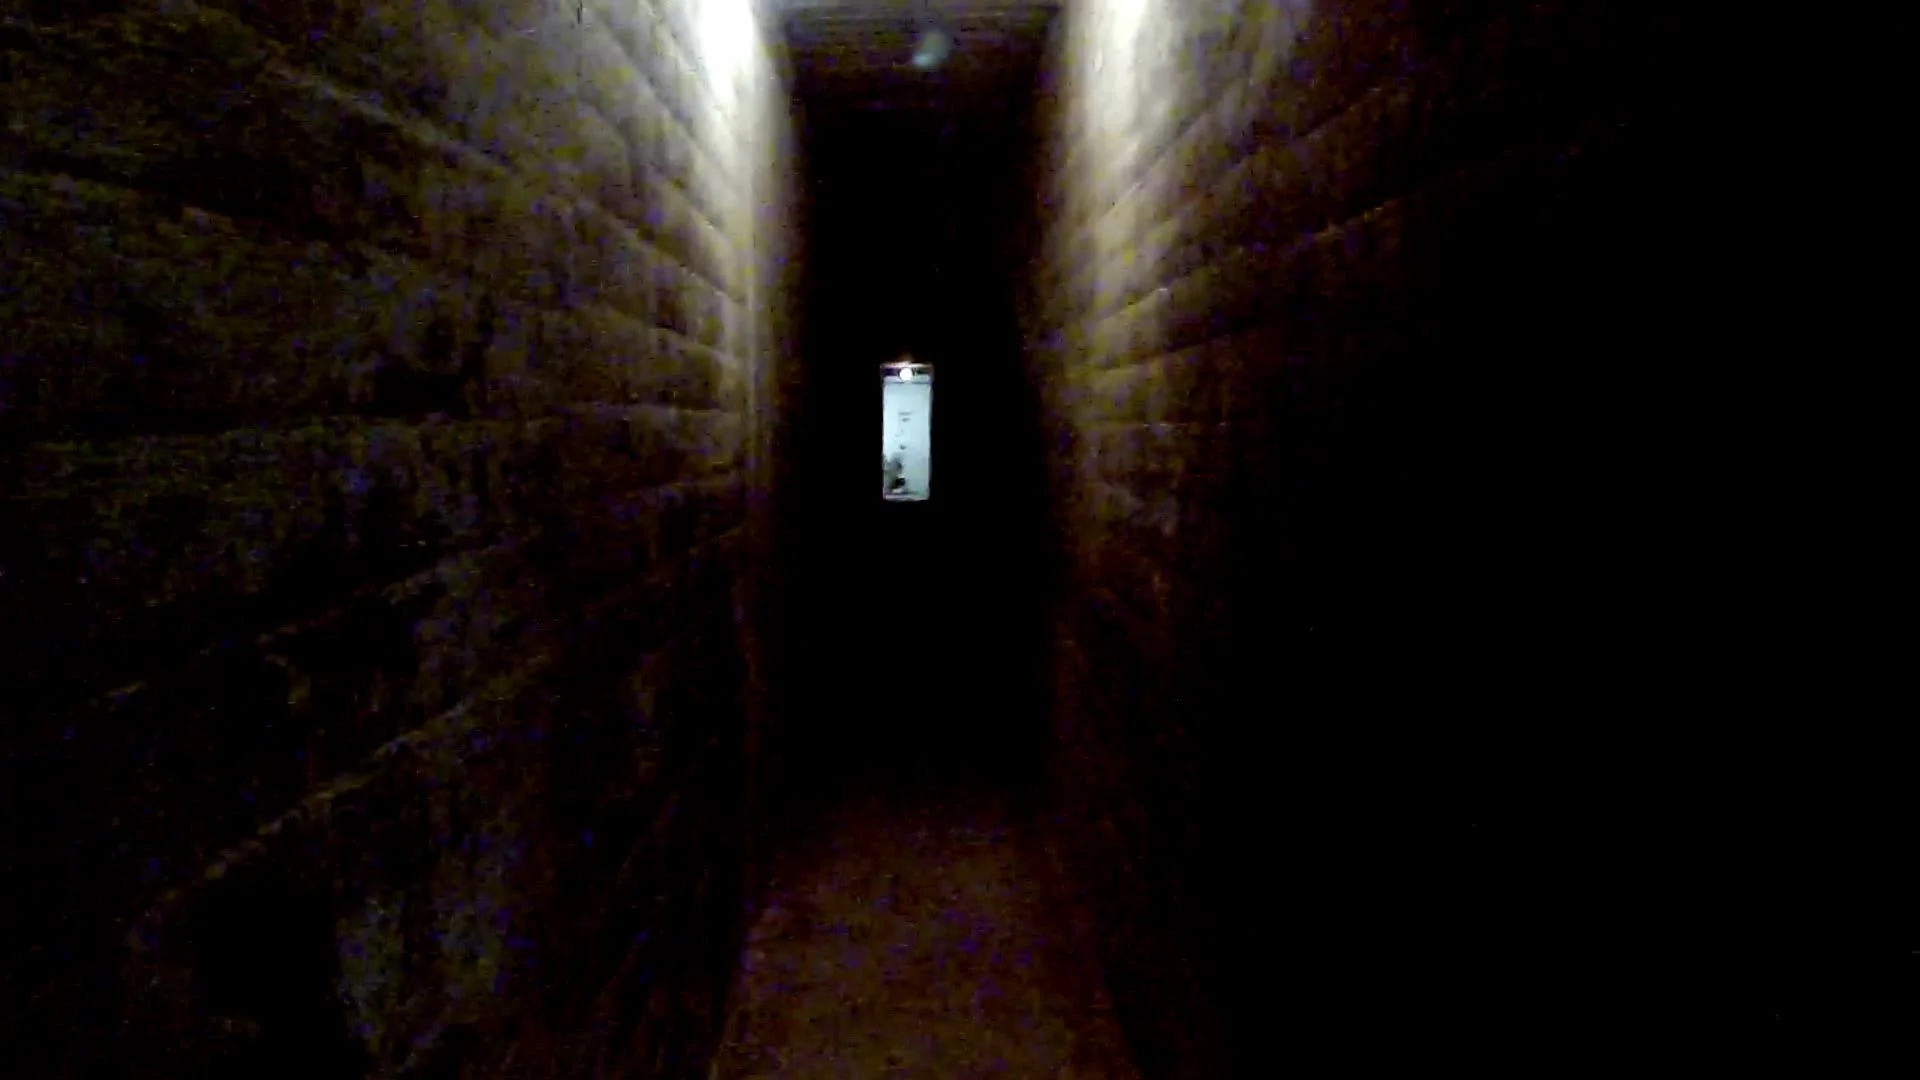 dark scary hallway